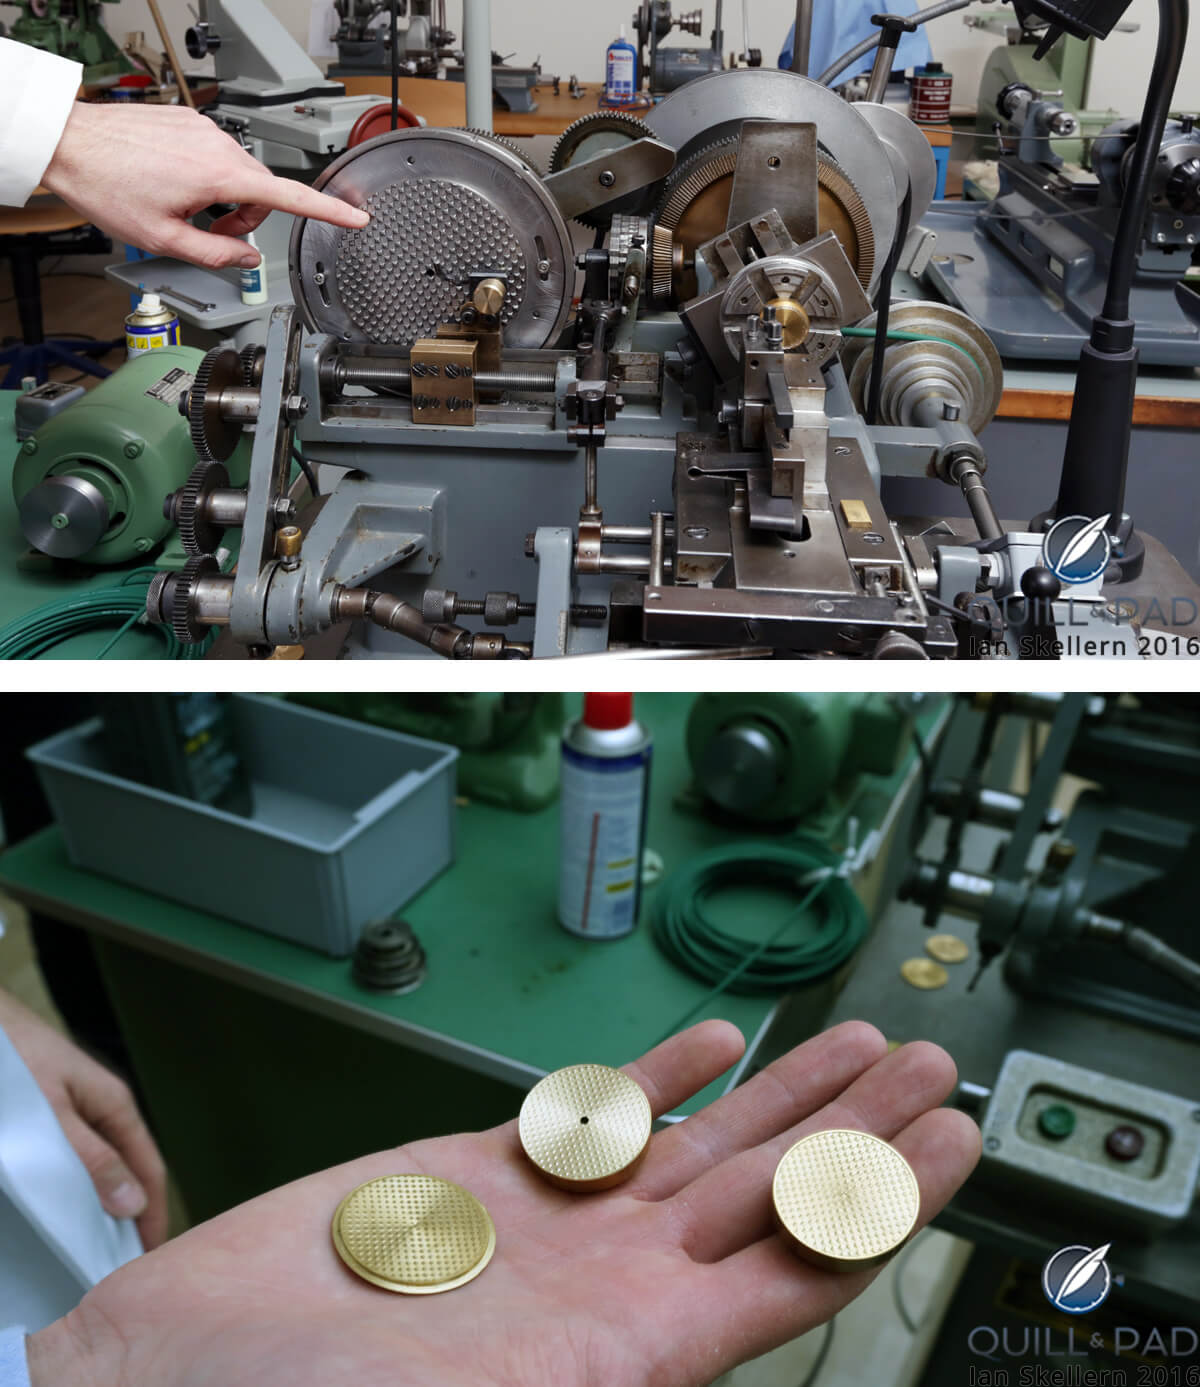 Brocading machine used to create the guilloche dials of the Oscillon l’Instant de Vérité